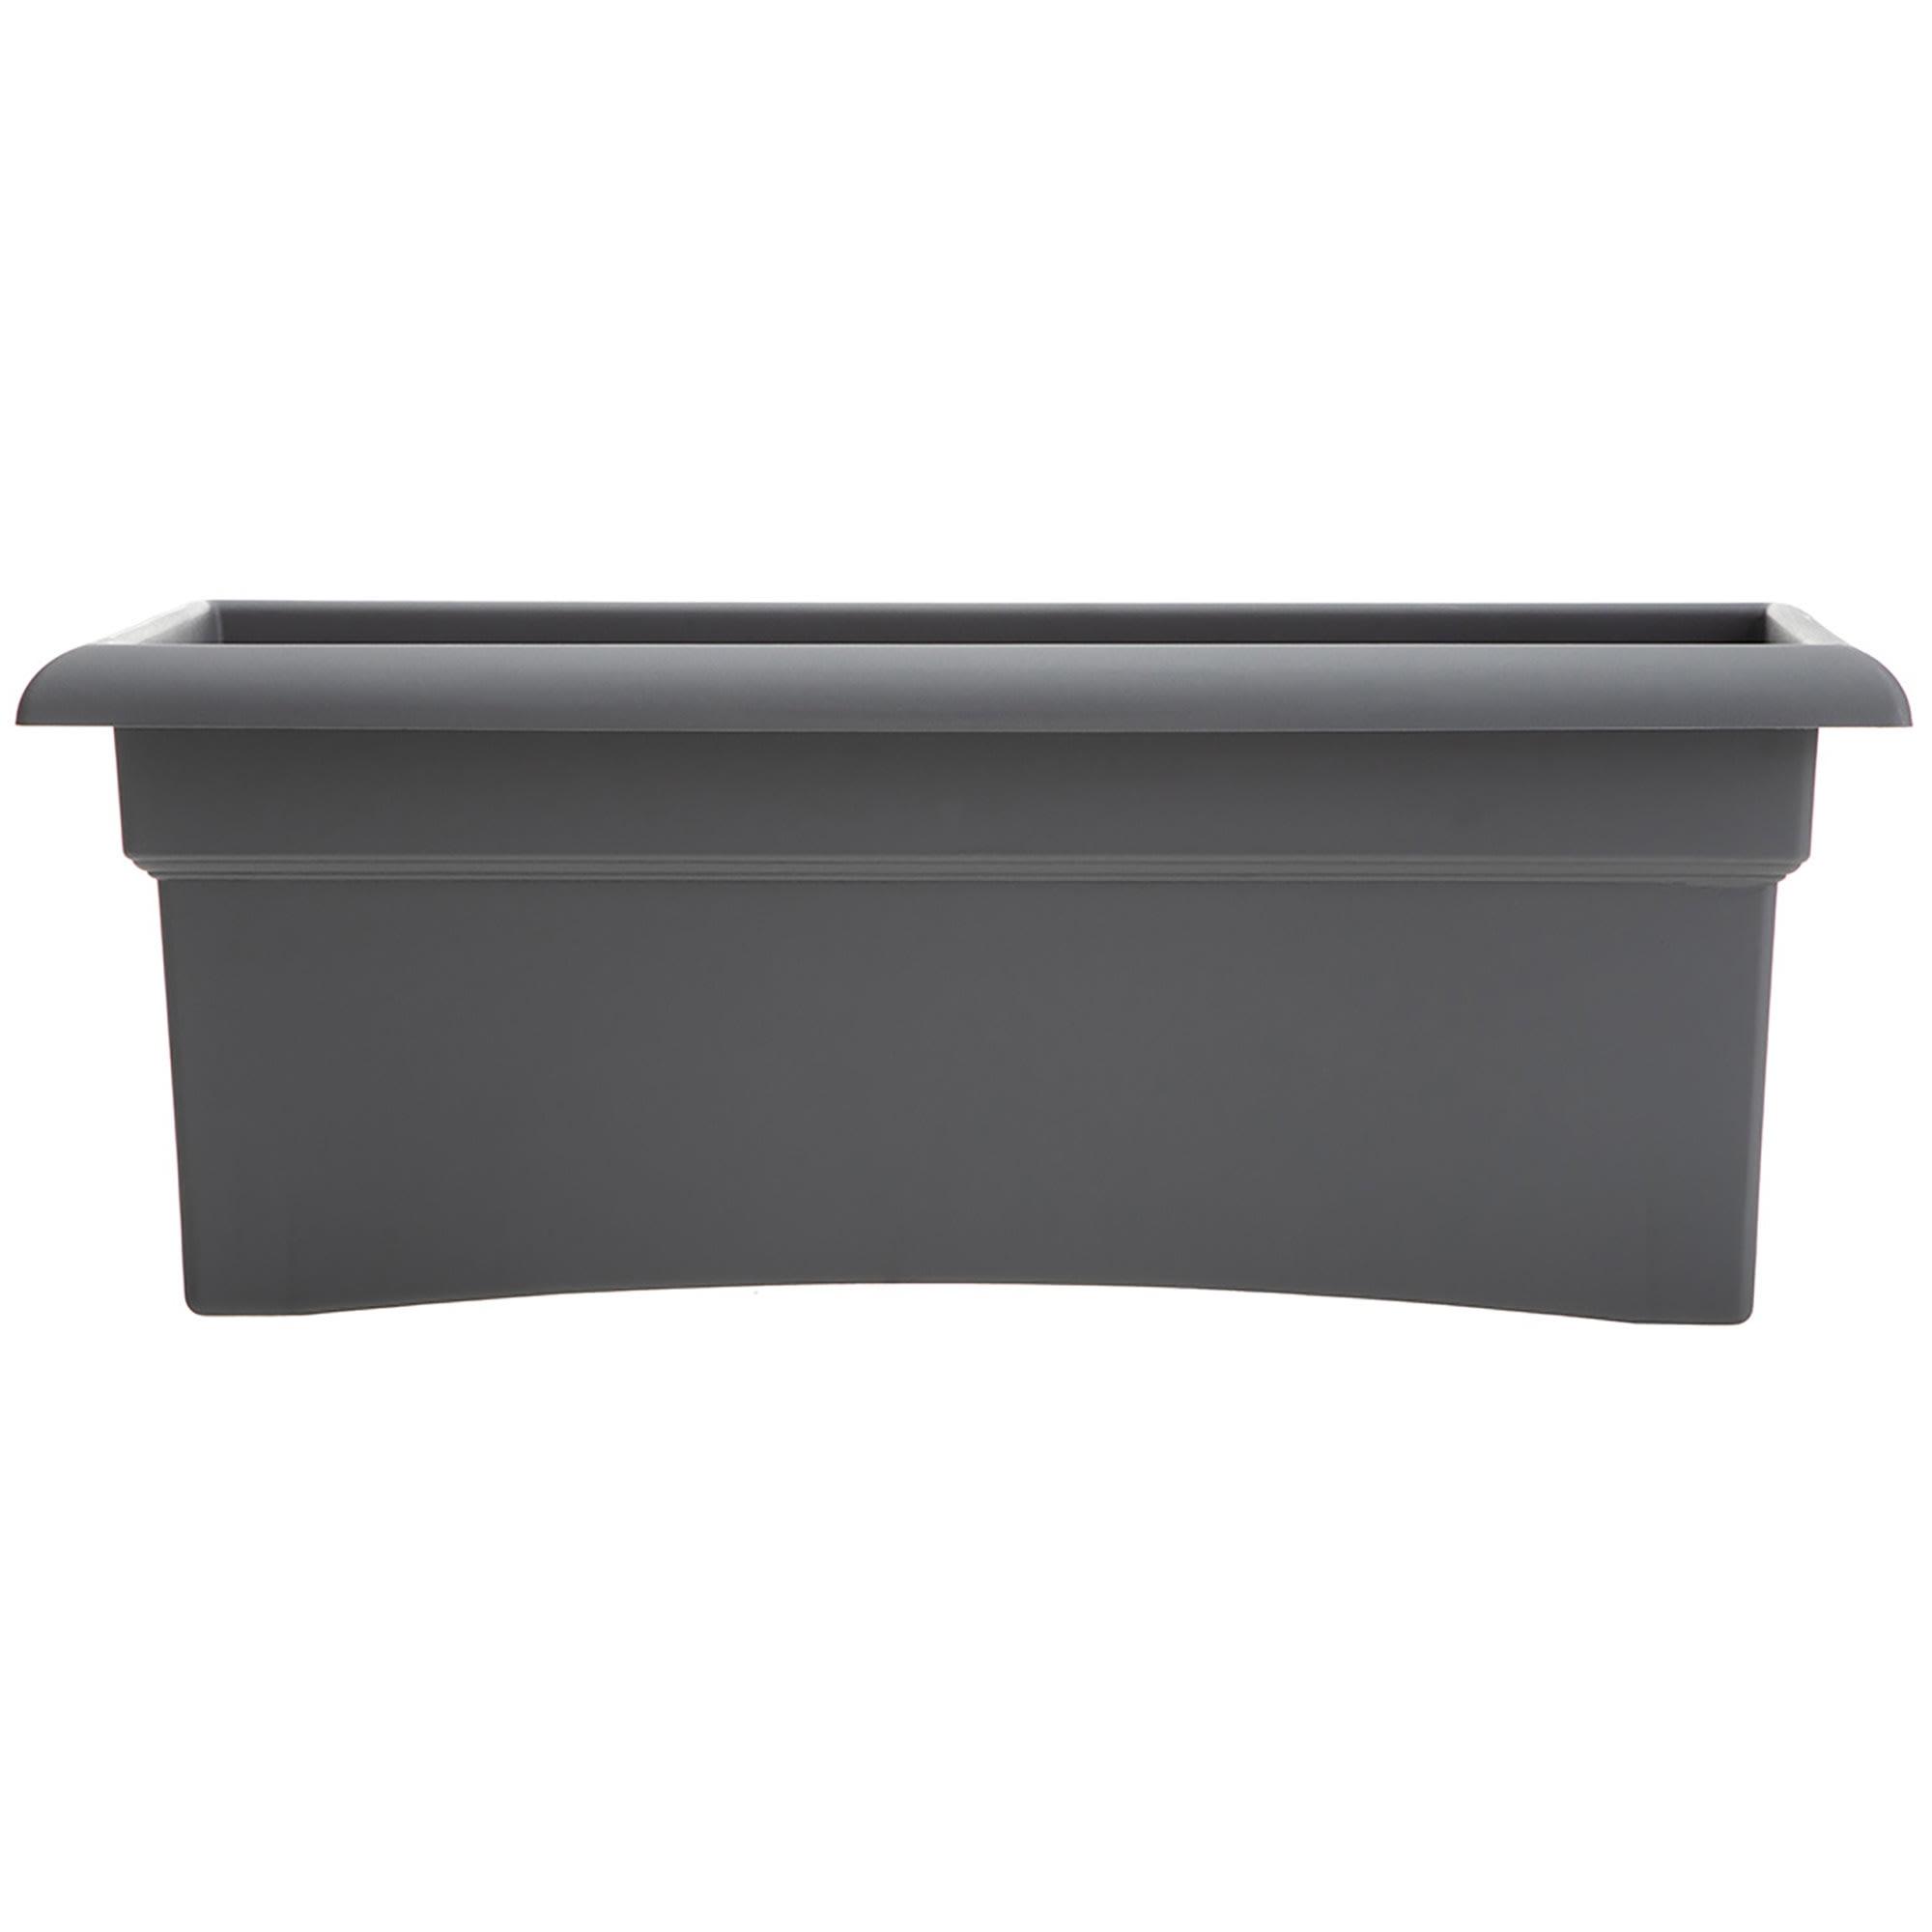 Charcoal Gray 26-inch Wide Resin Veranda Deck Box Planter